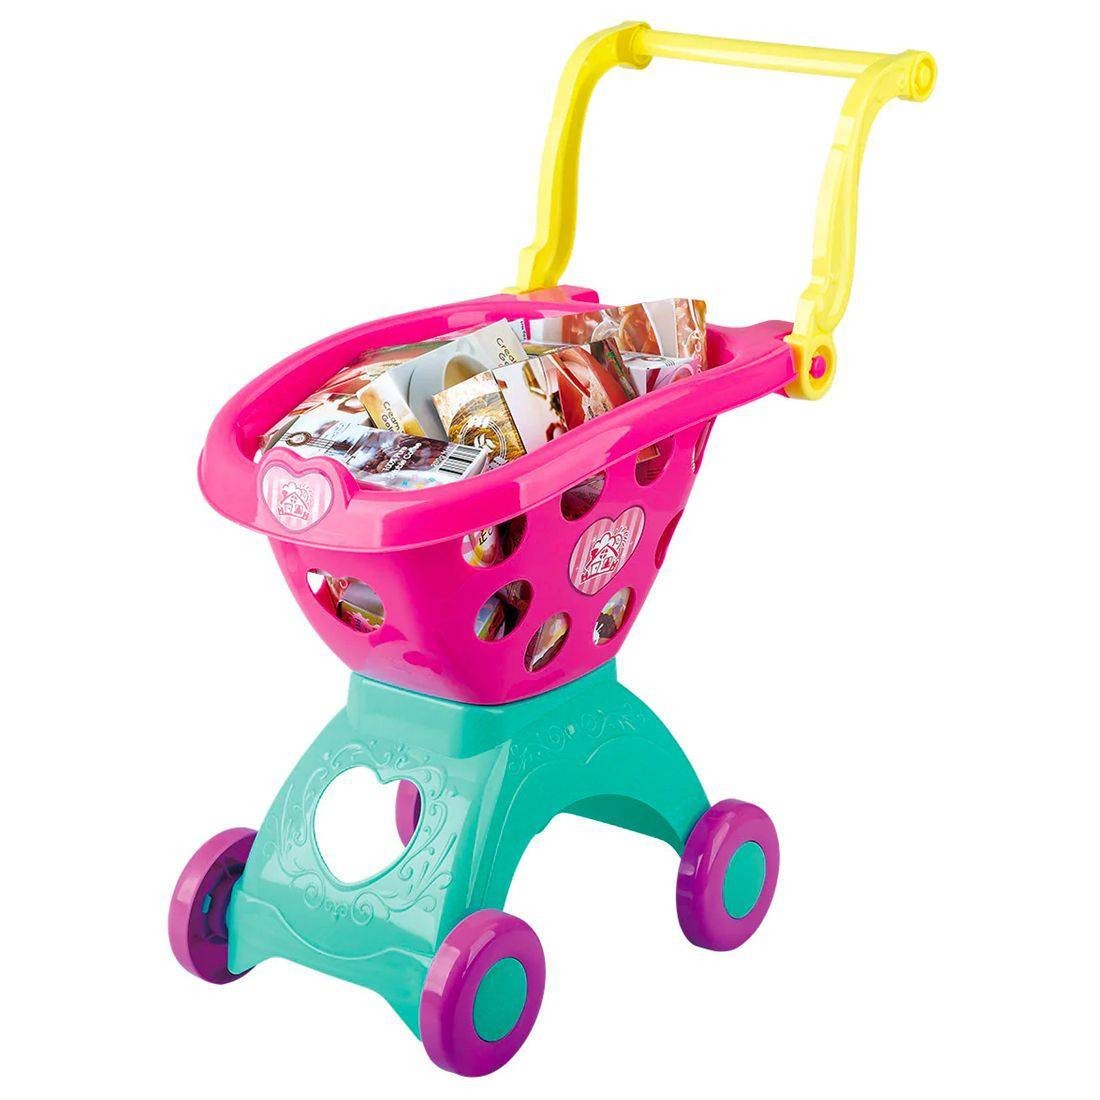 playgo-shopping-cart-playgo-amman-4892401060808